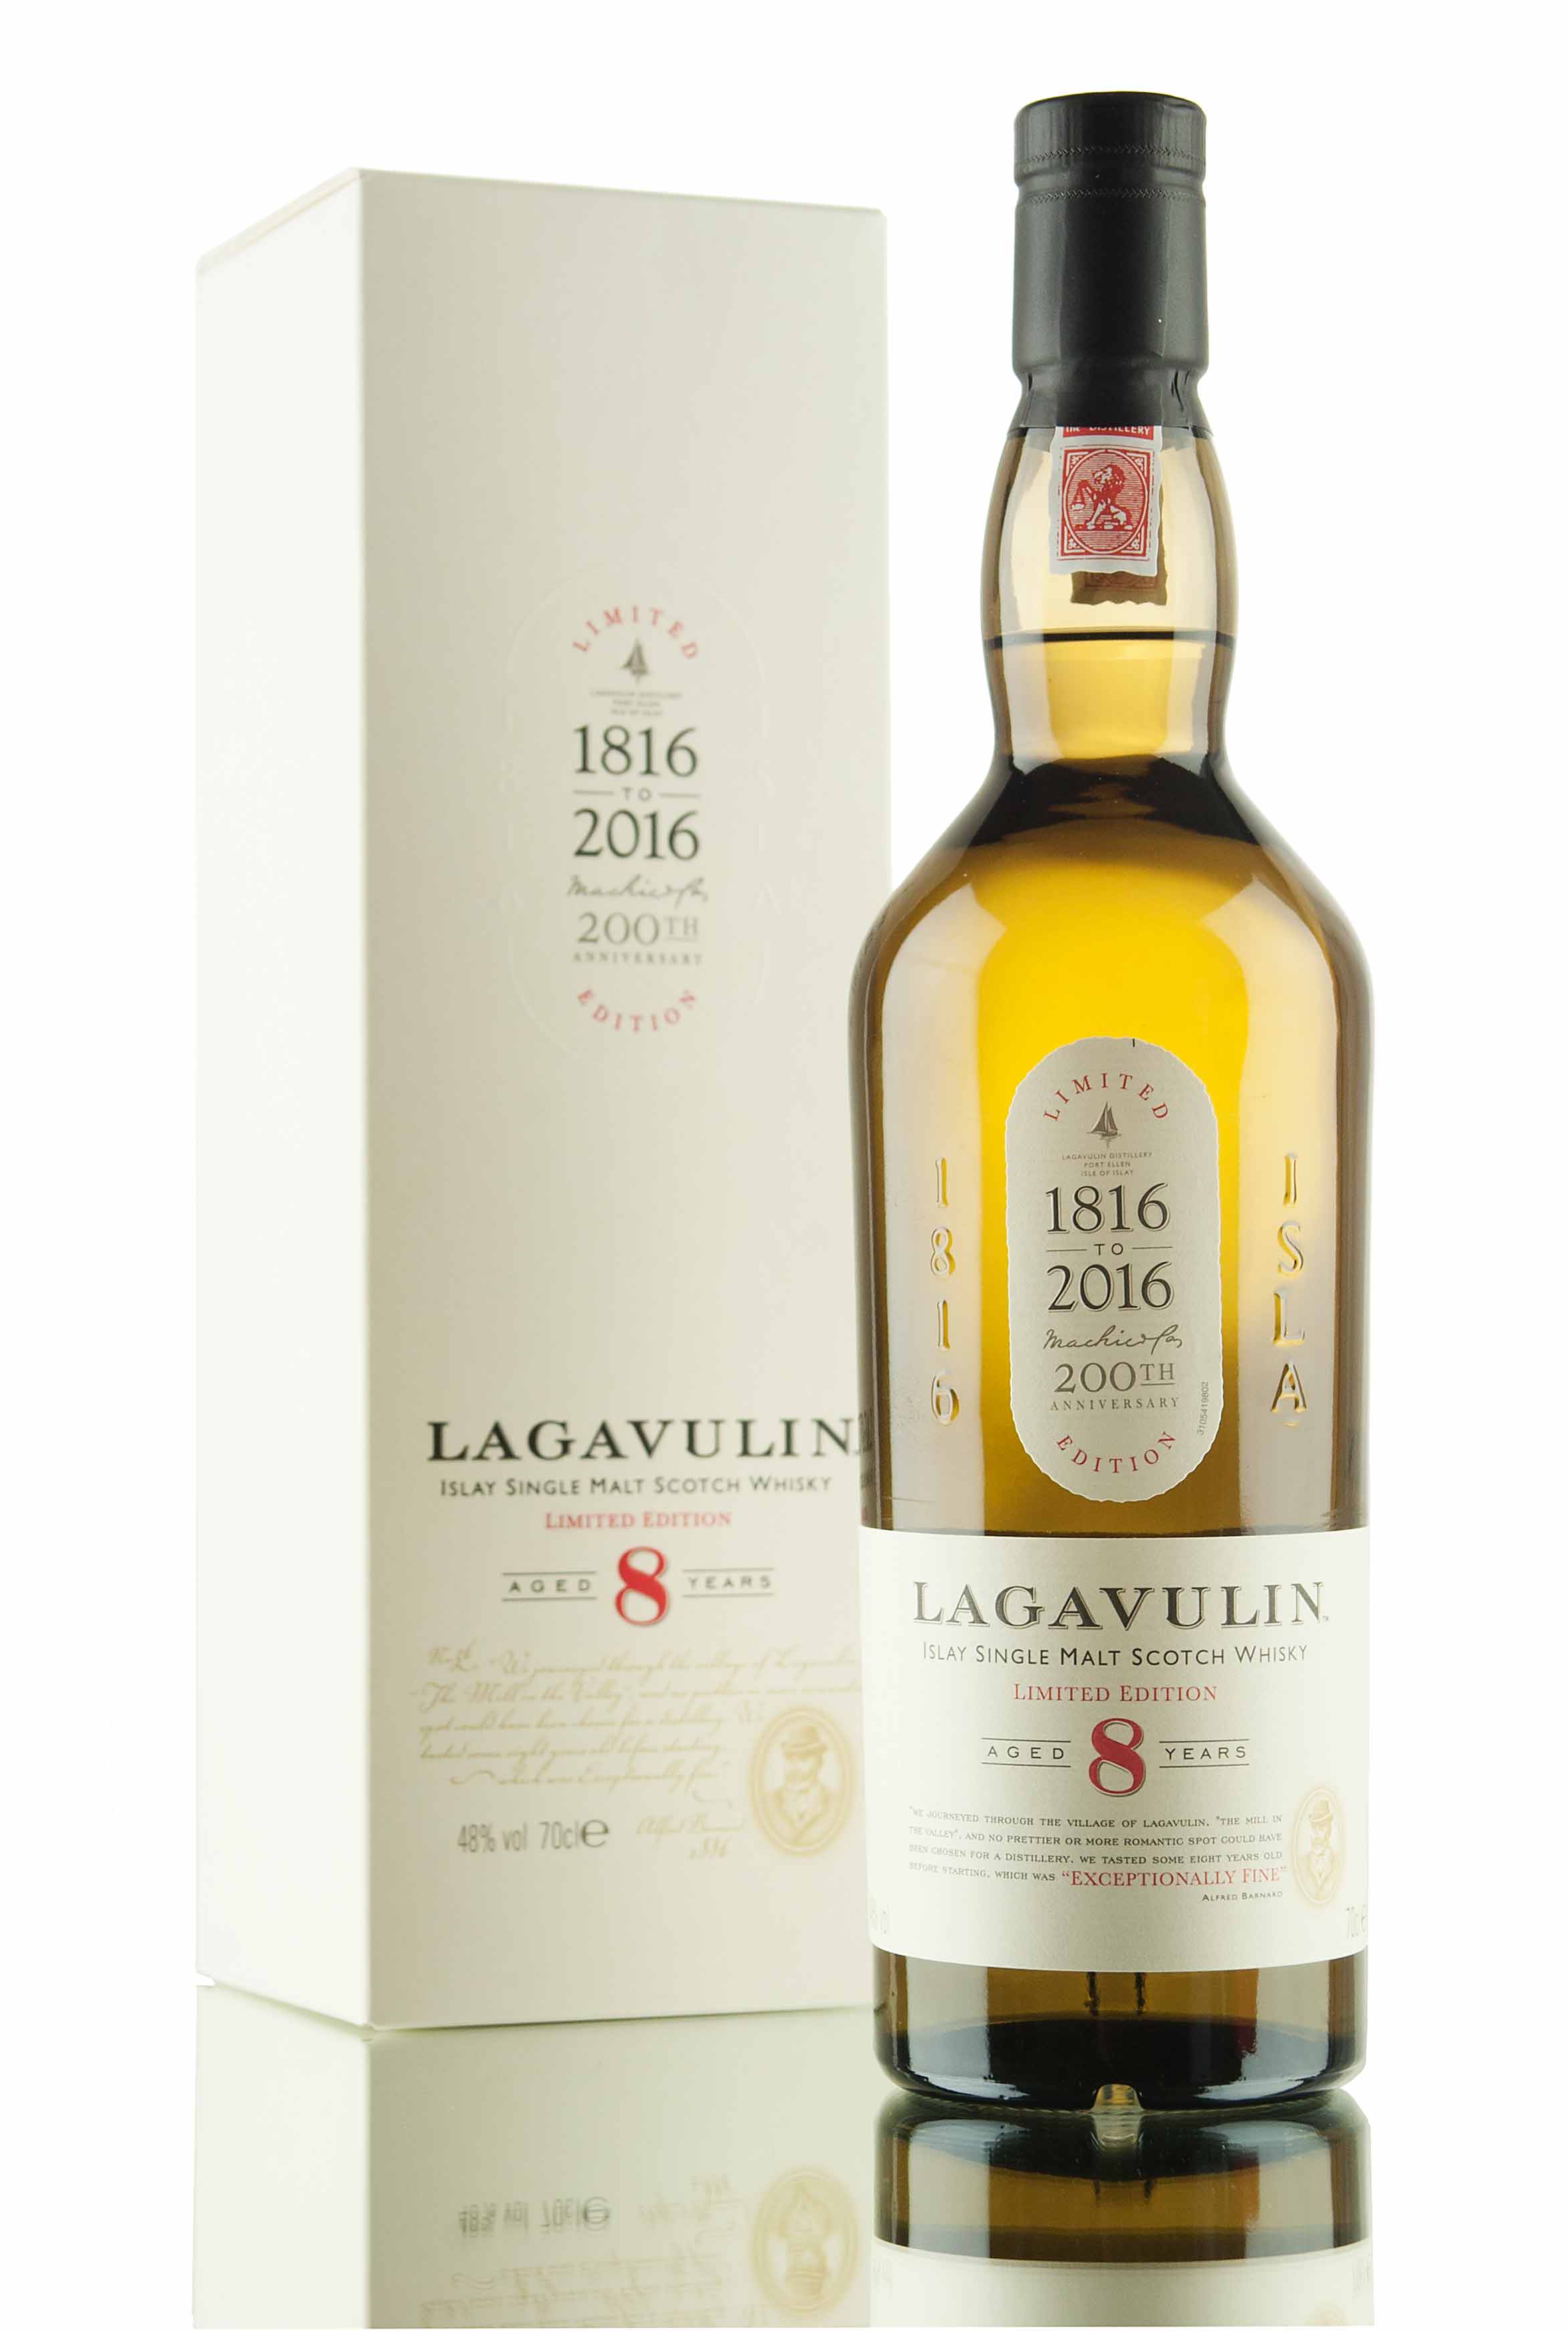 Lagavulin 8 Year Old / 200th Anniversary Edition